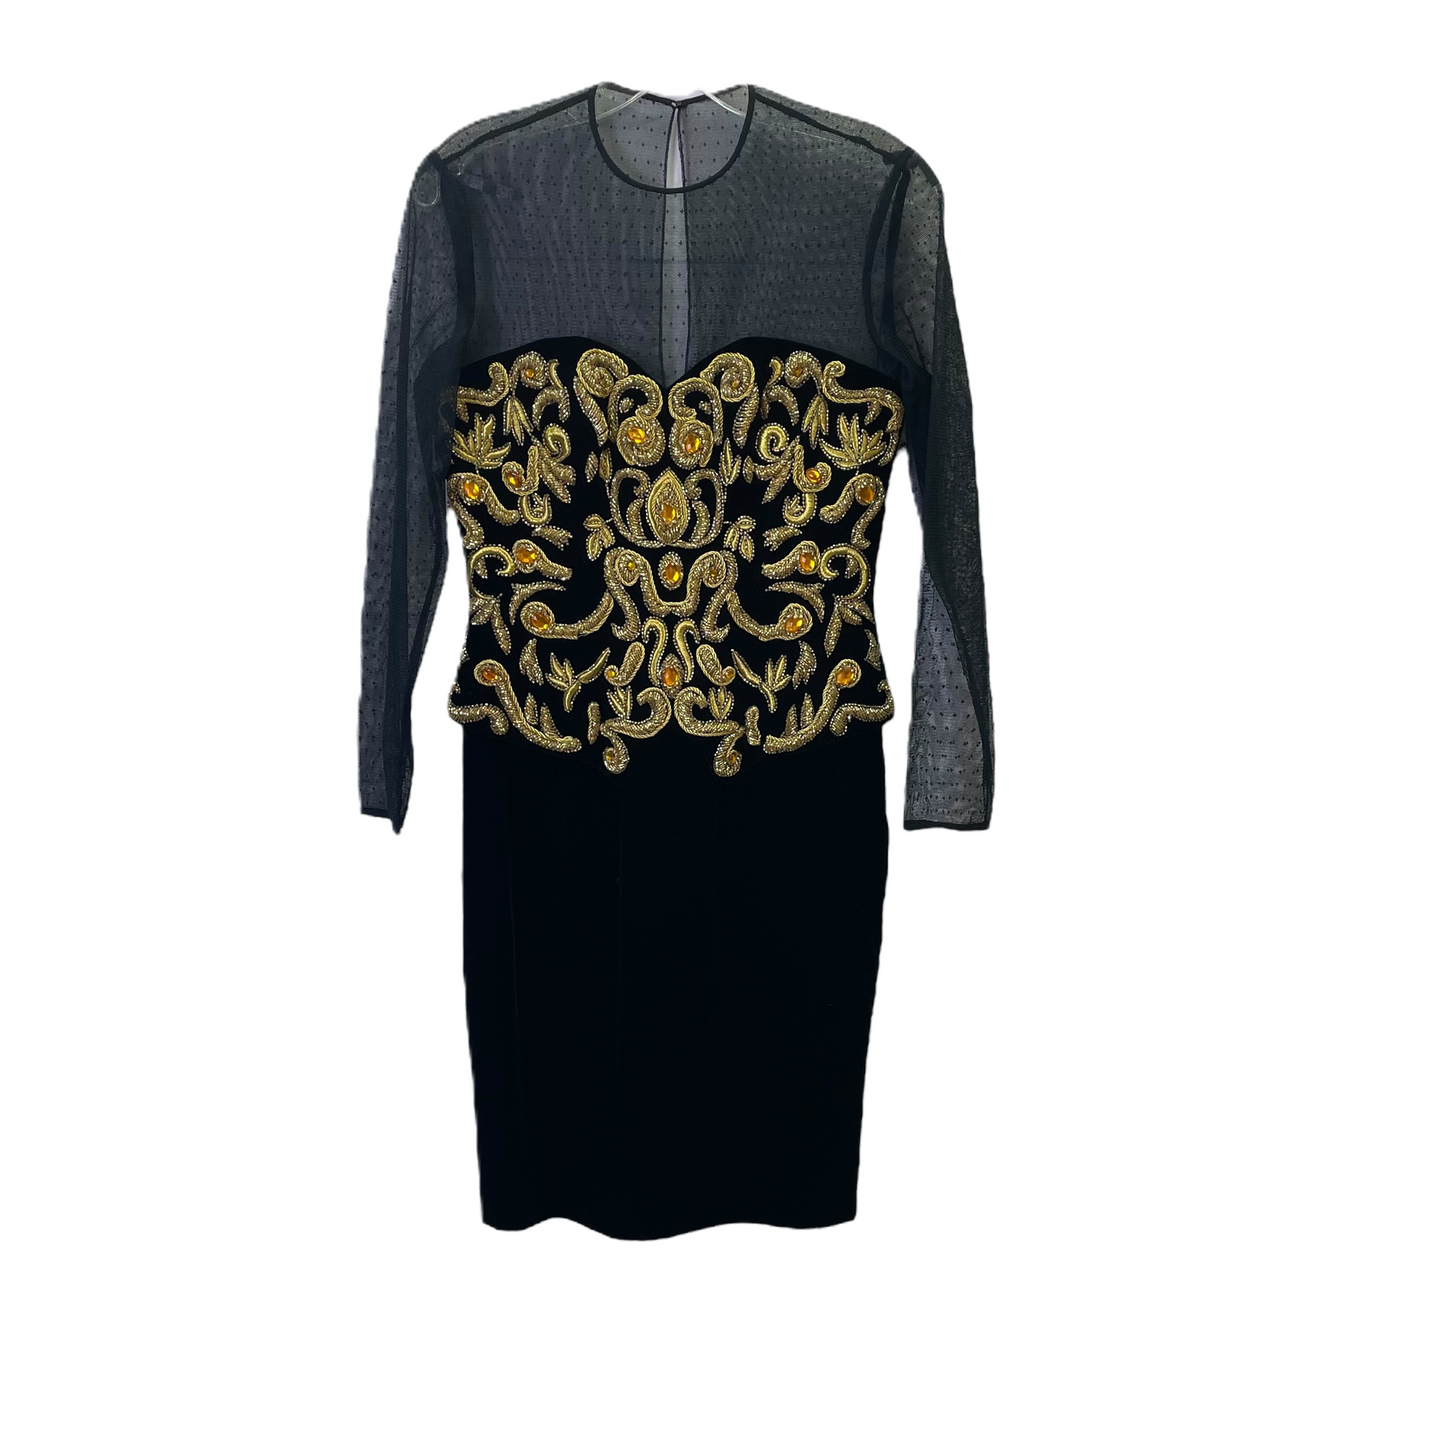 Black & Gold Dress Designer By Victoria Royal , Size: S